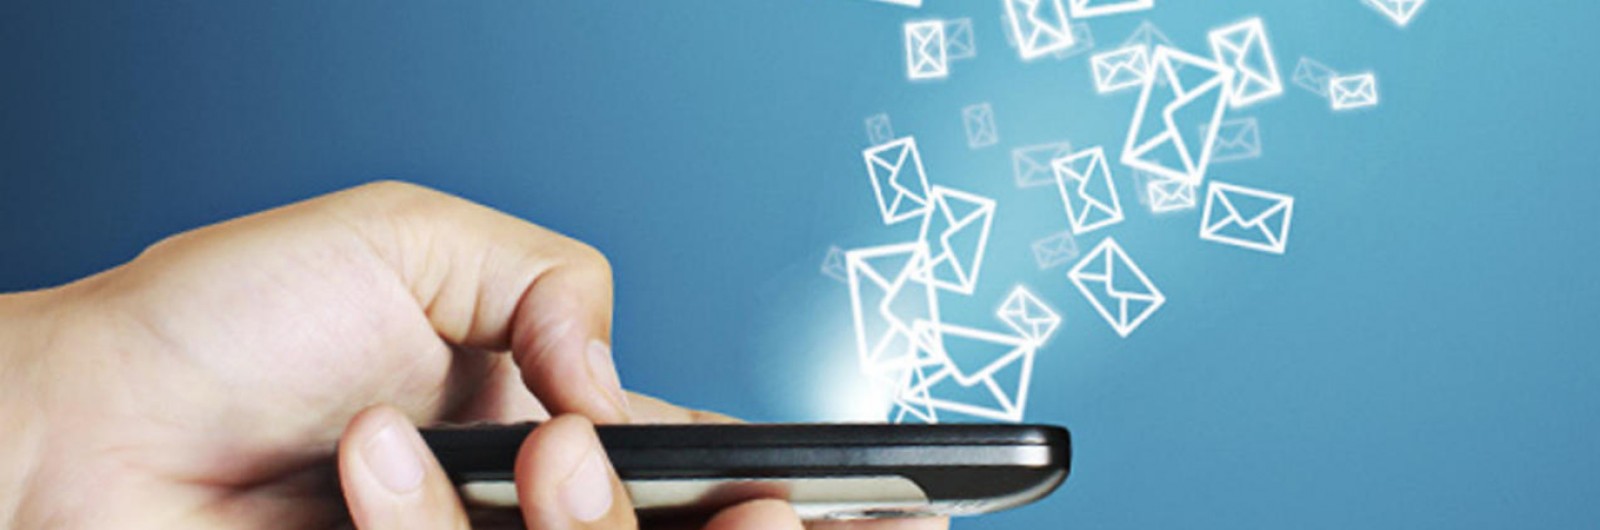 Bulk SMS in Nigeria – How To Send Bulk SMS @ 0.65kobo/Unit